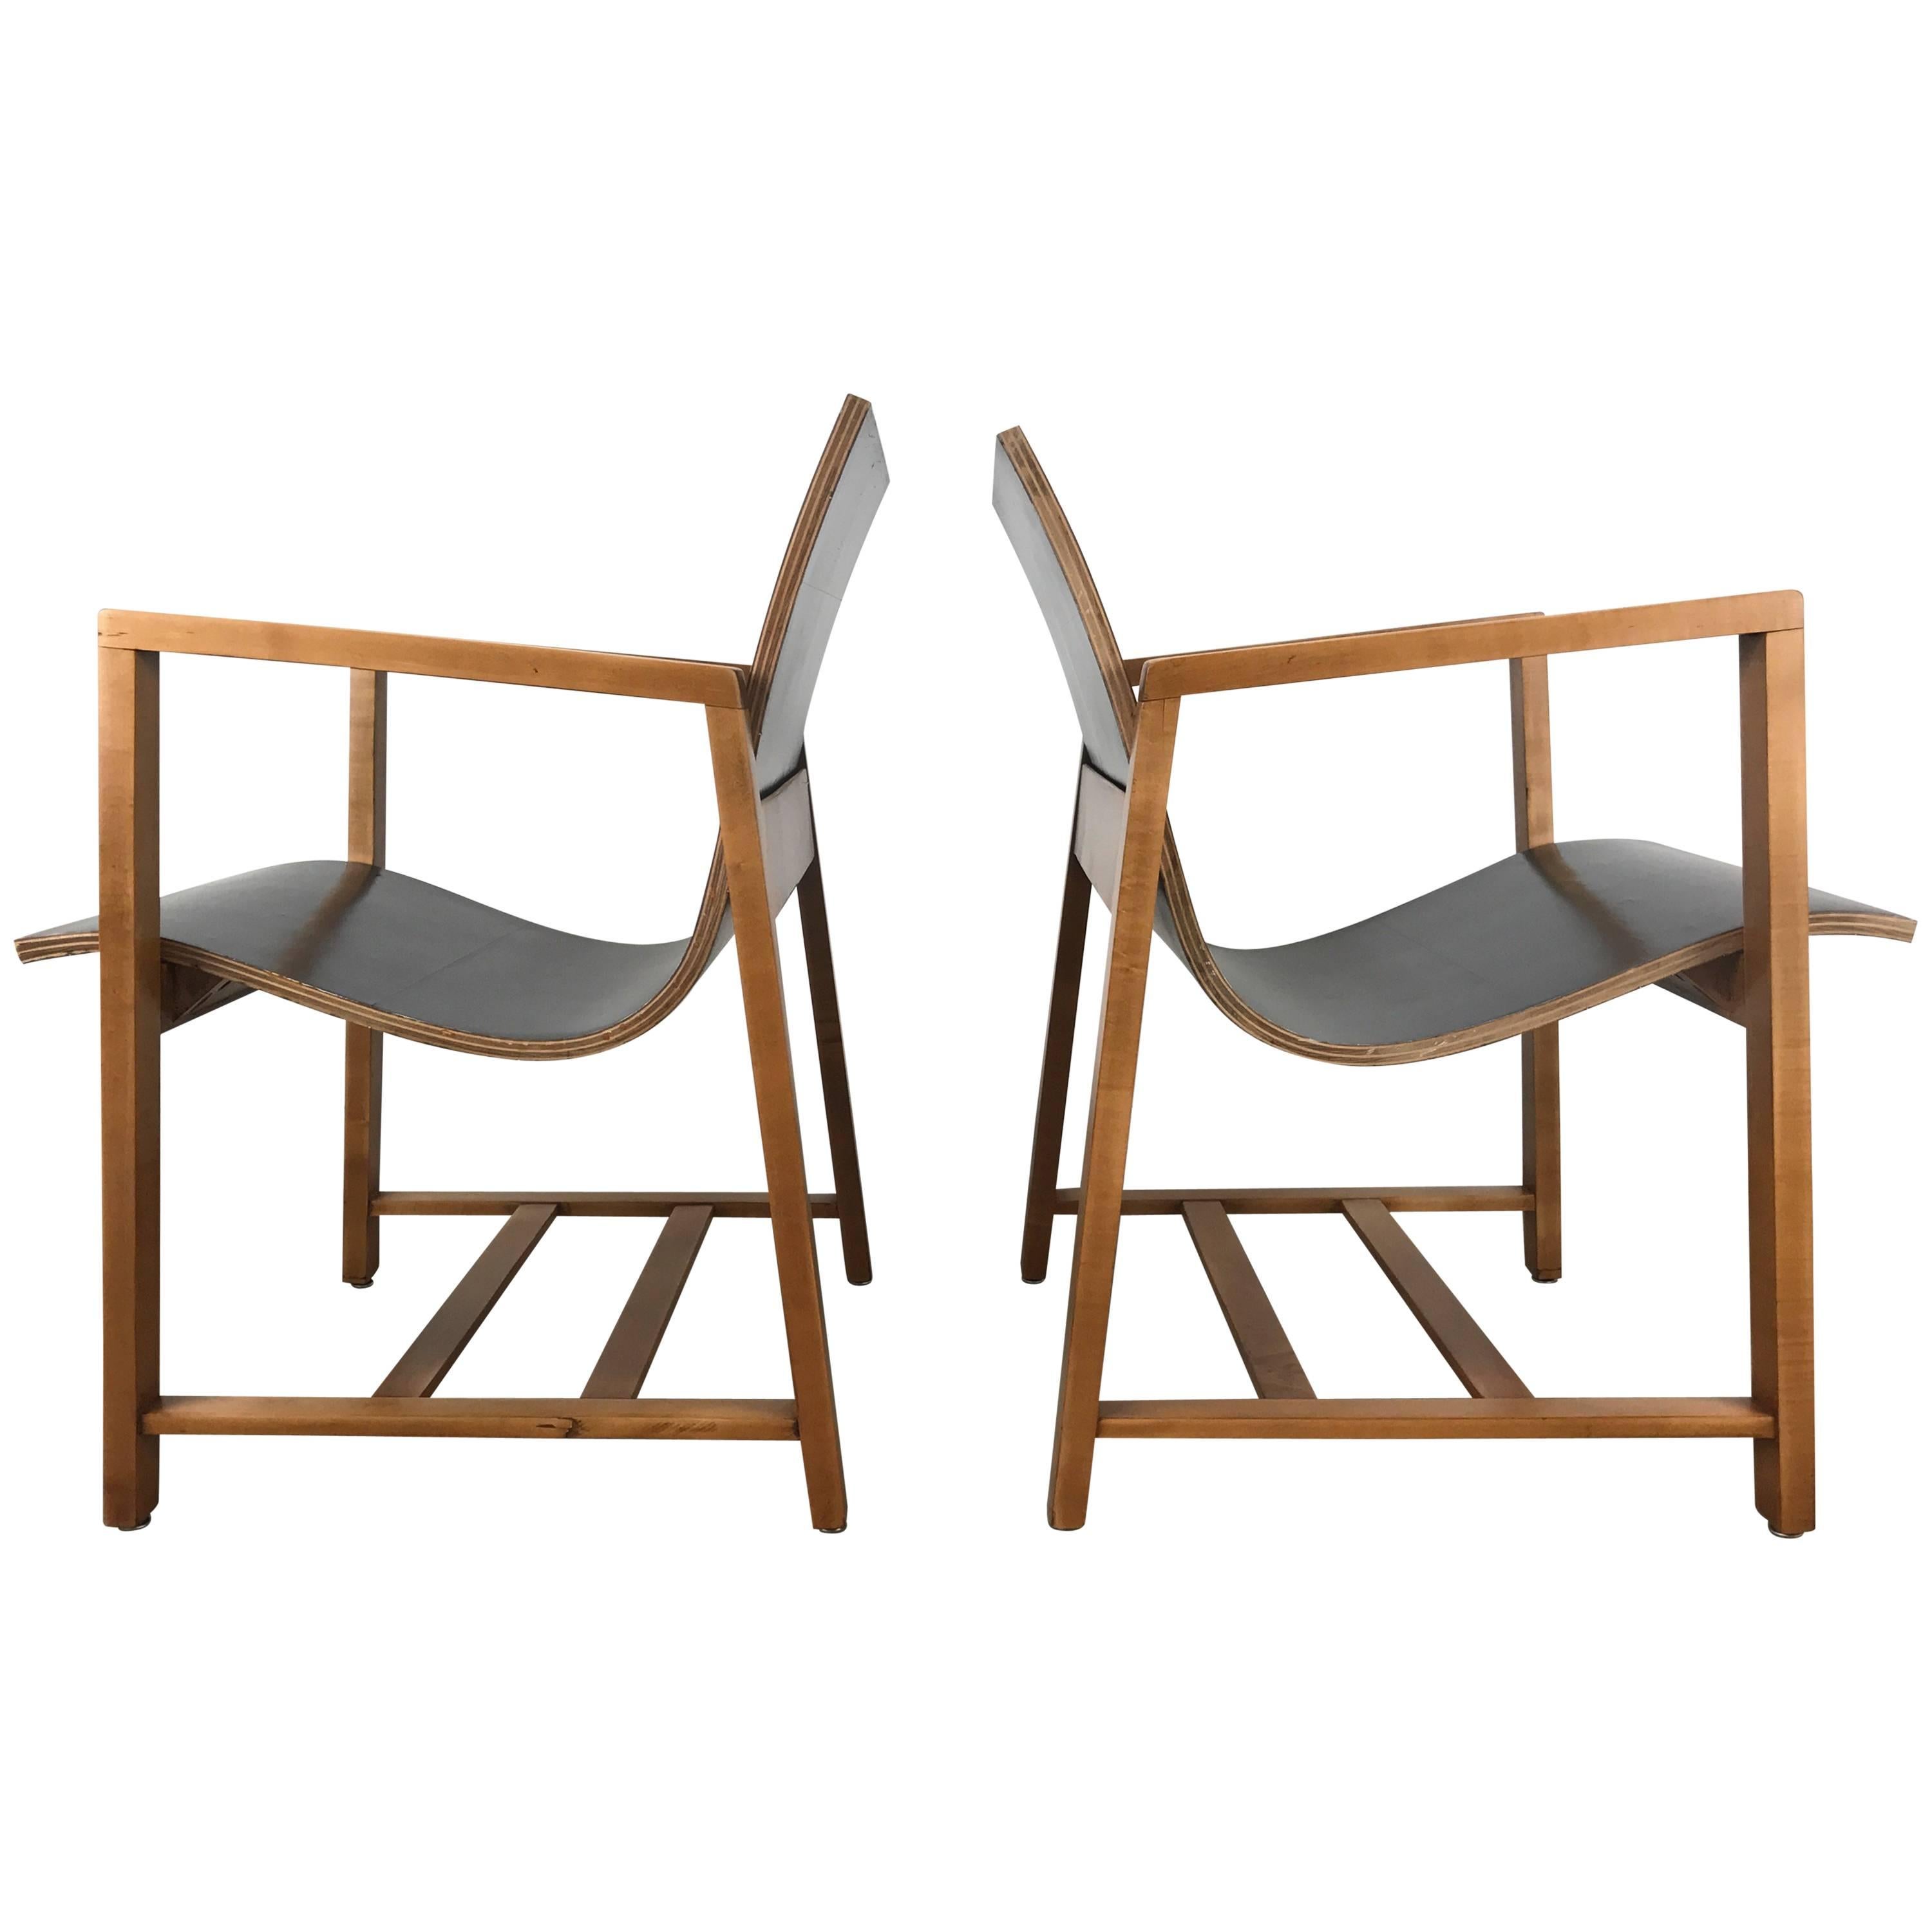 Rare Pair of "Kleinhans" Chairs, circa 1939 Charles Eames/Eero Saarinen